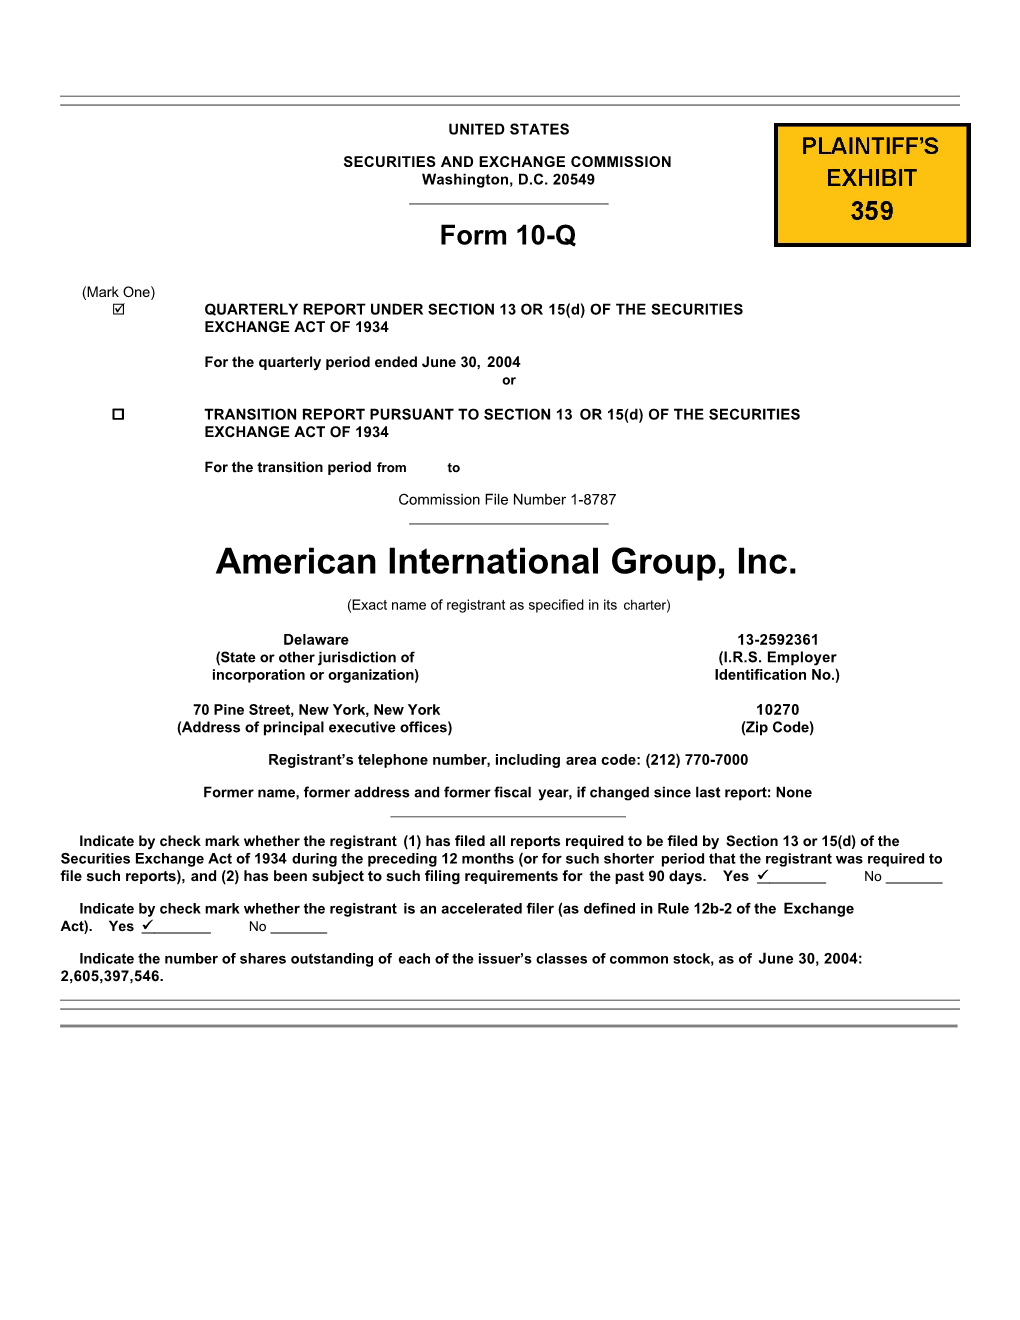 PX-359: 8/9/2004: American International Group, Inc. Form 10-Q